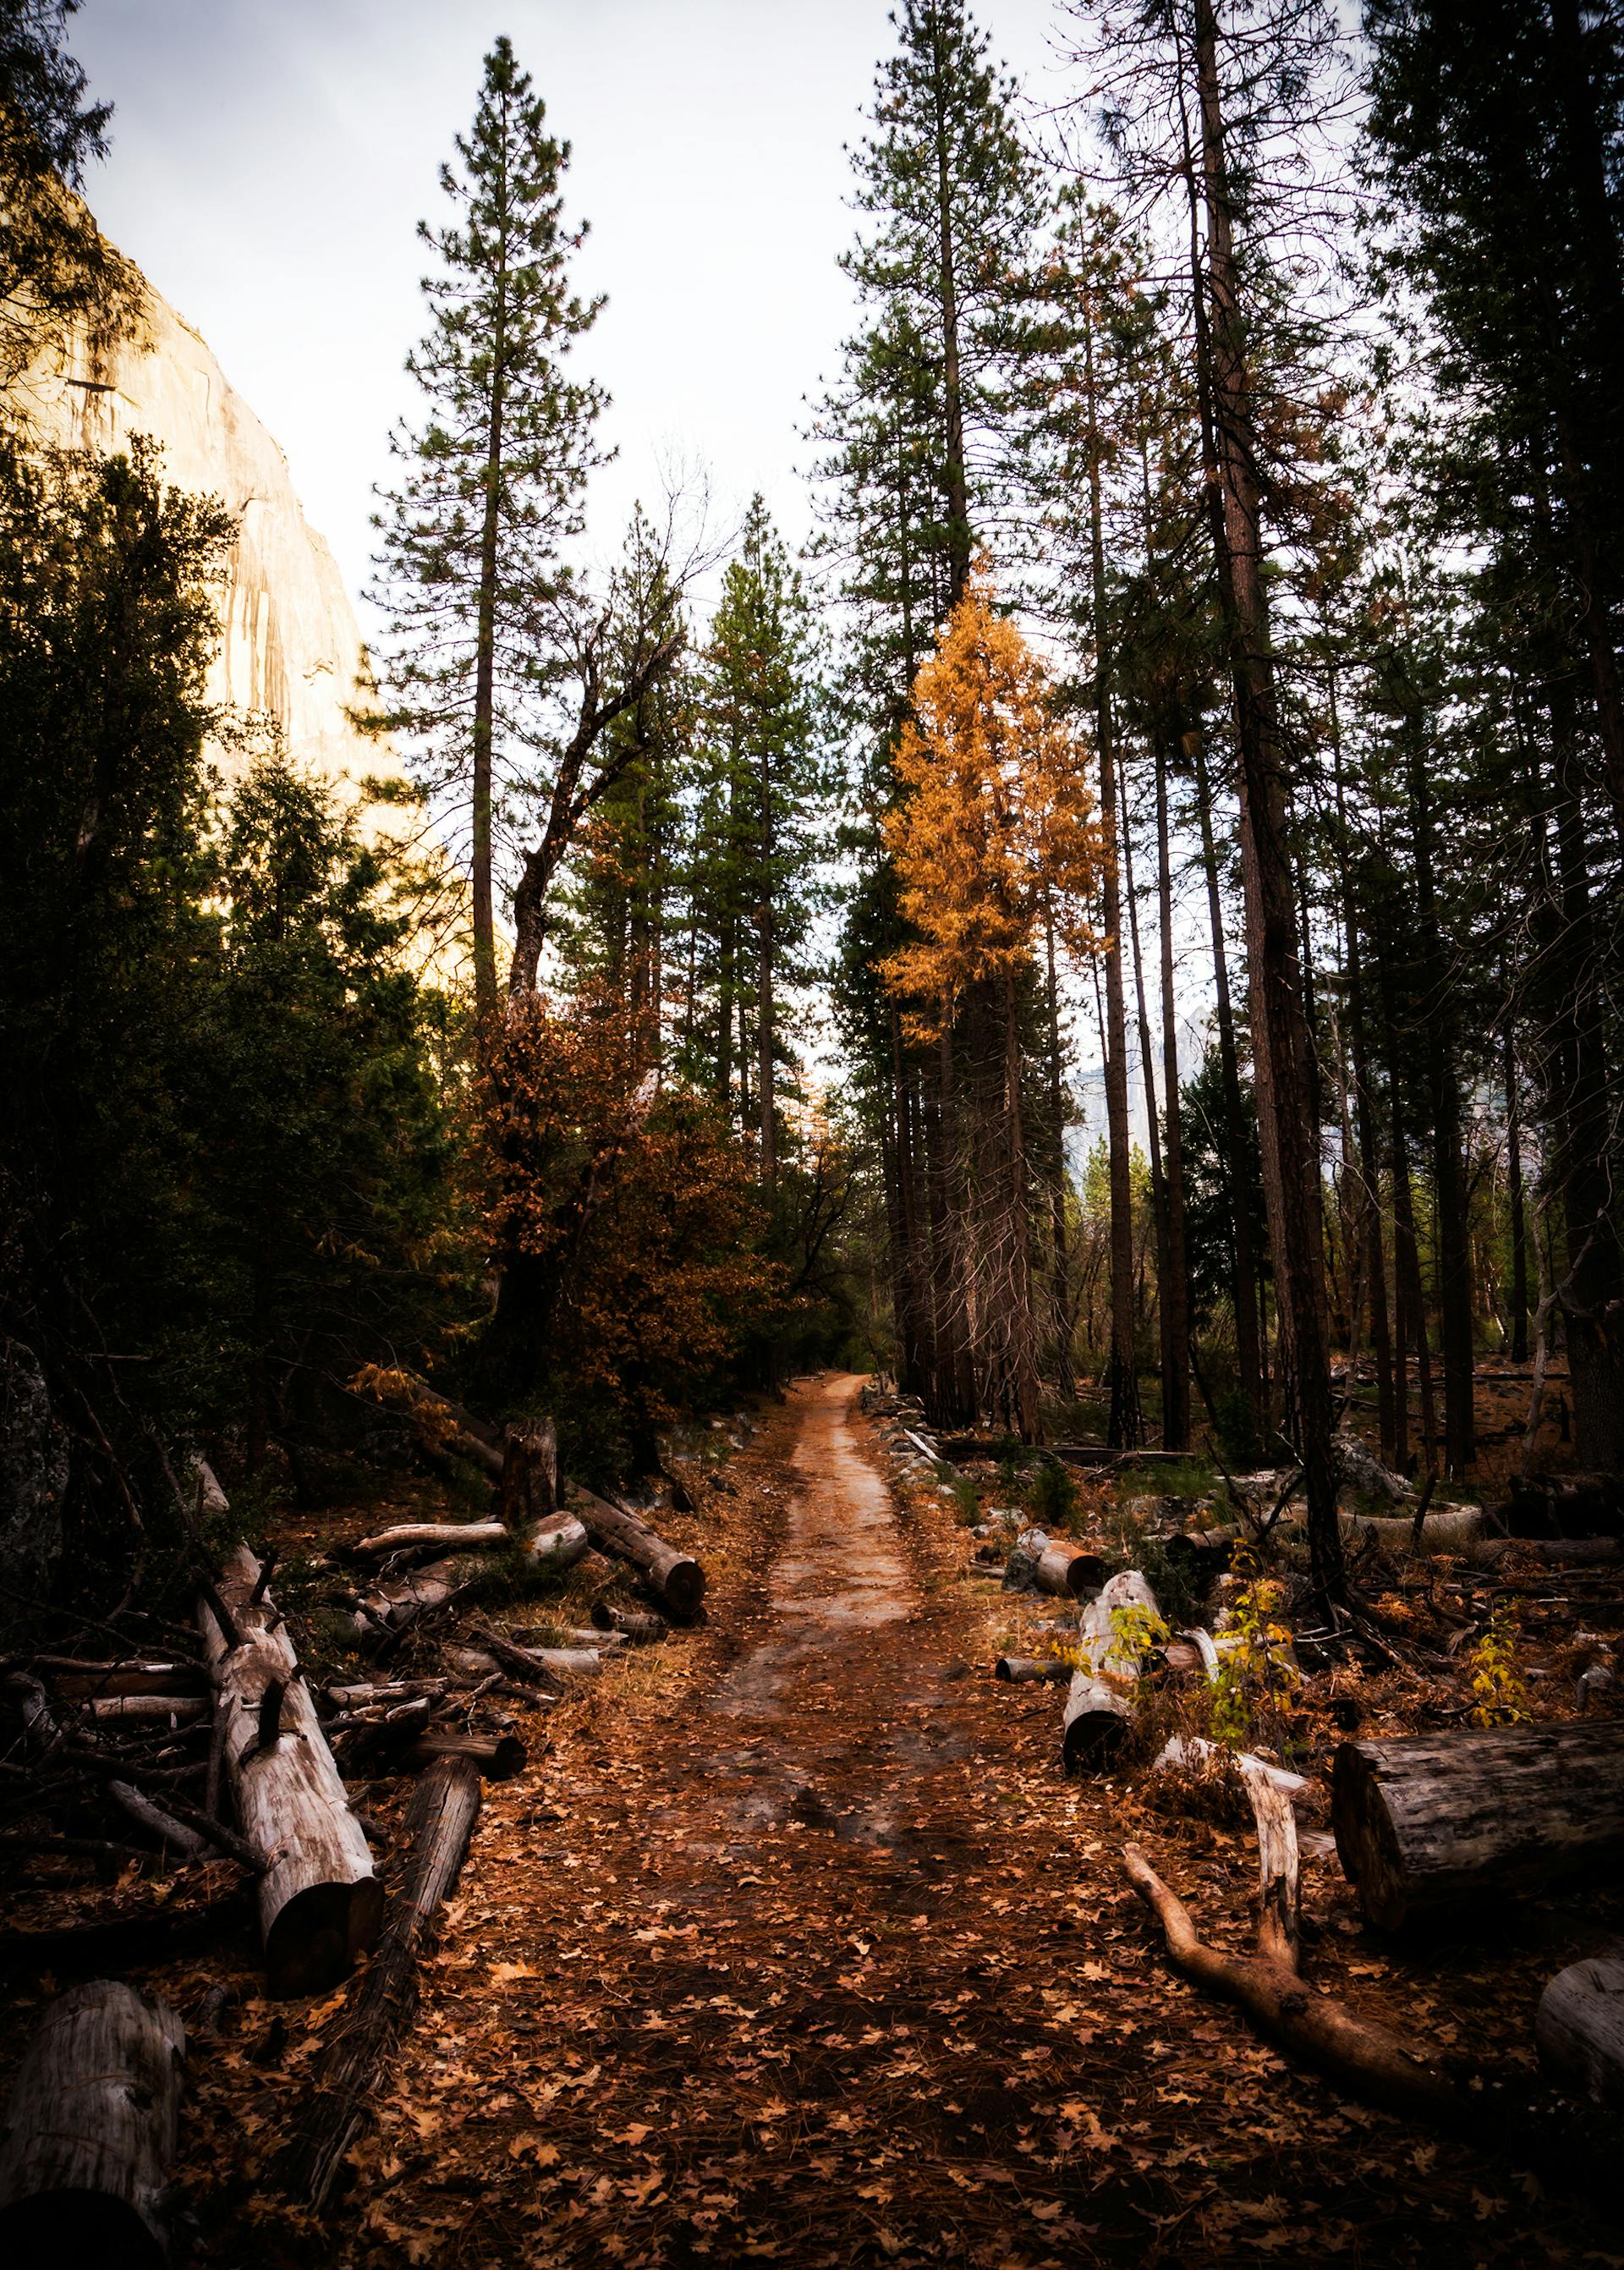 A hiking trail | Source: Pexels